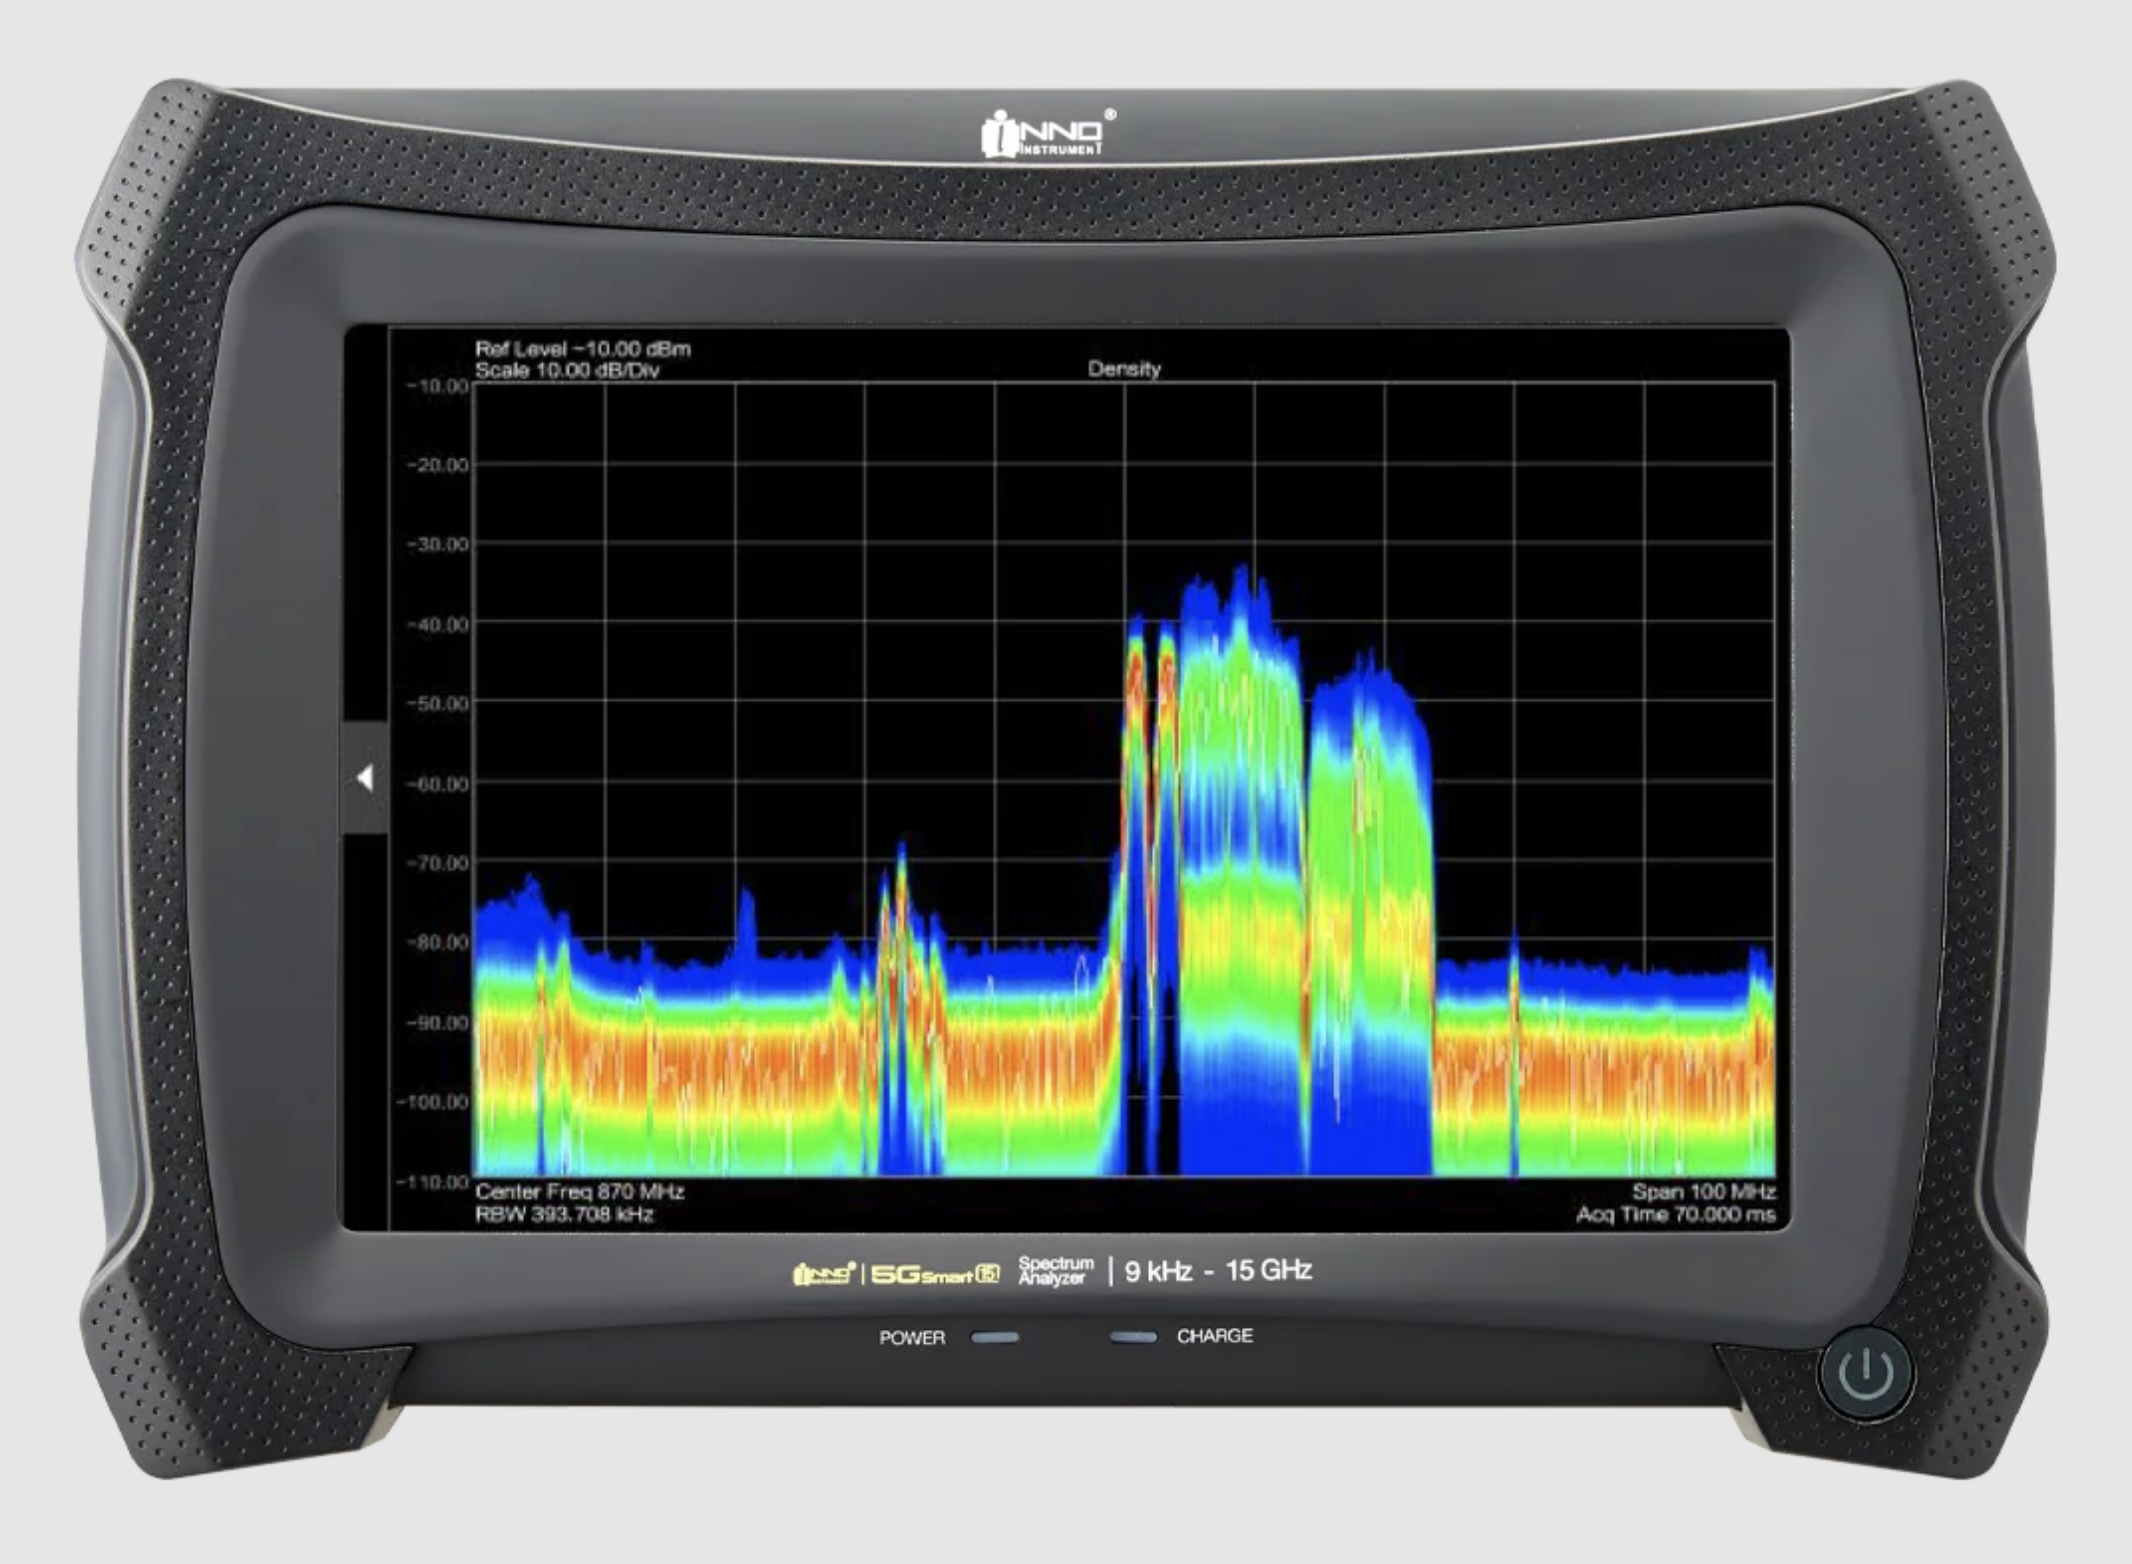 Анализатор спектра INNO Instrument 5G SMART
с диапазоном от 9 кГц до 15 ГГц